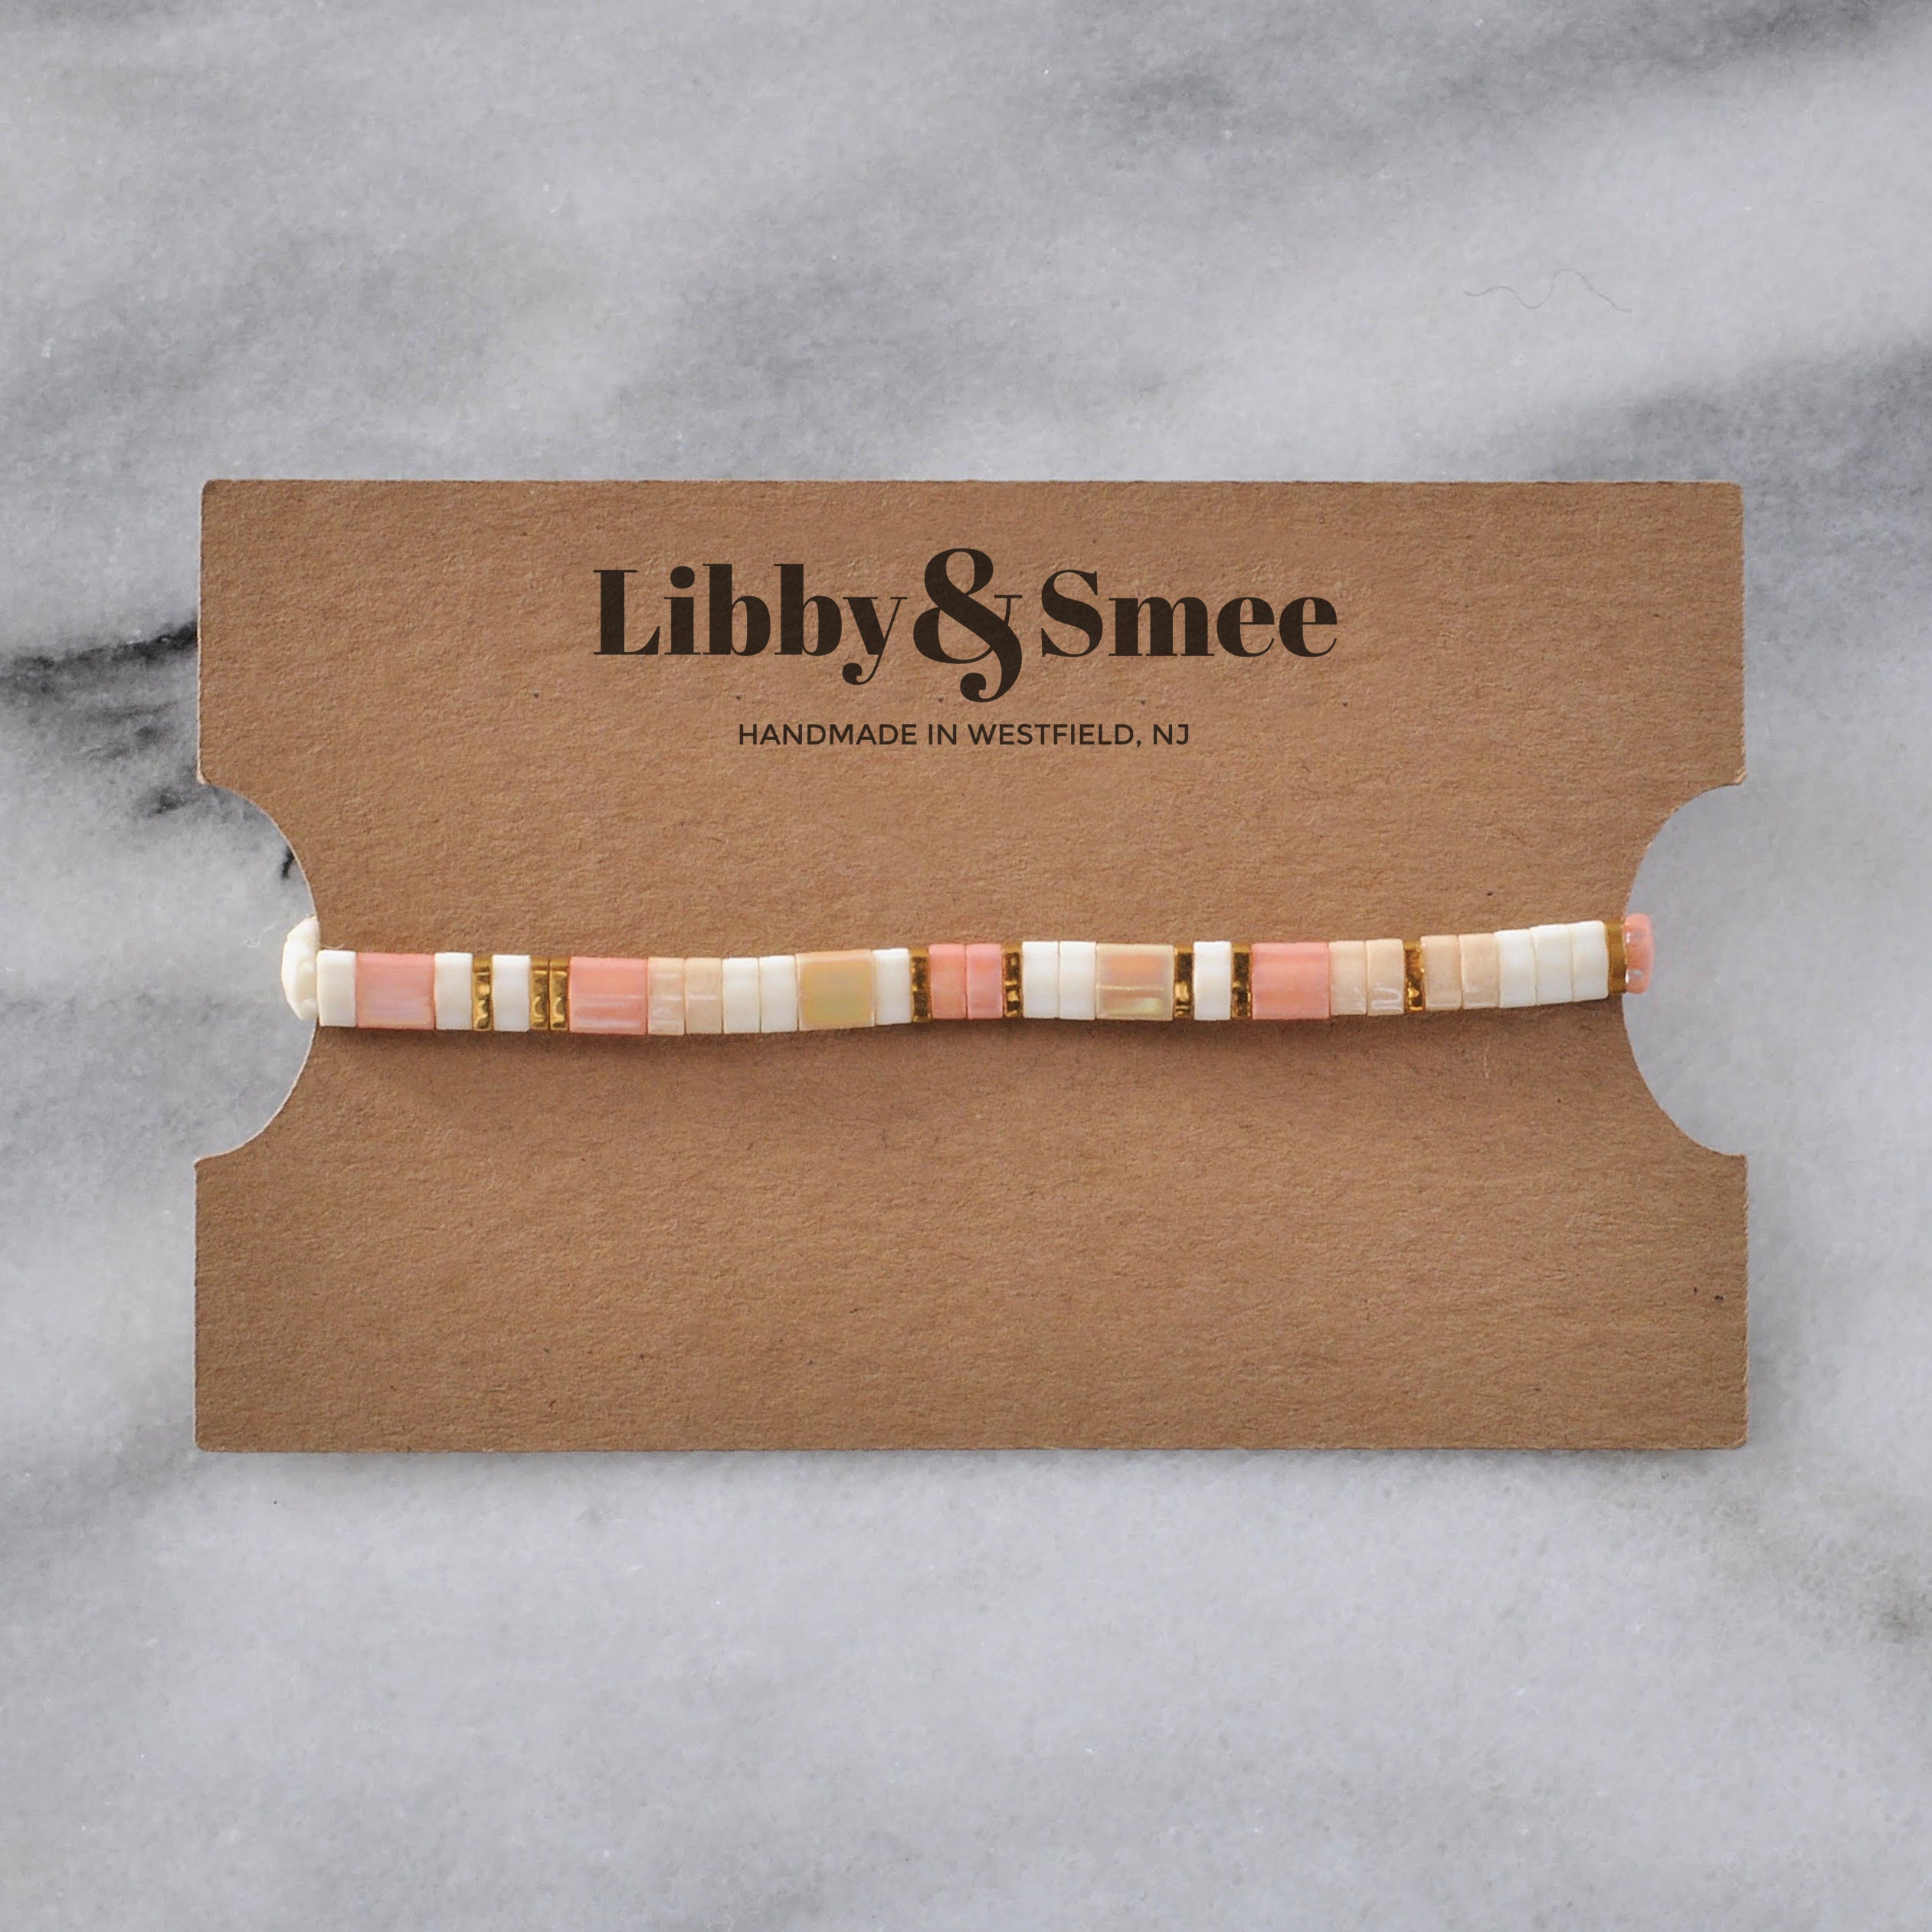 Libby & Smee stretch tile bracelet in Blush Mix